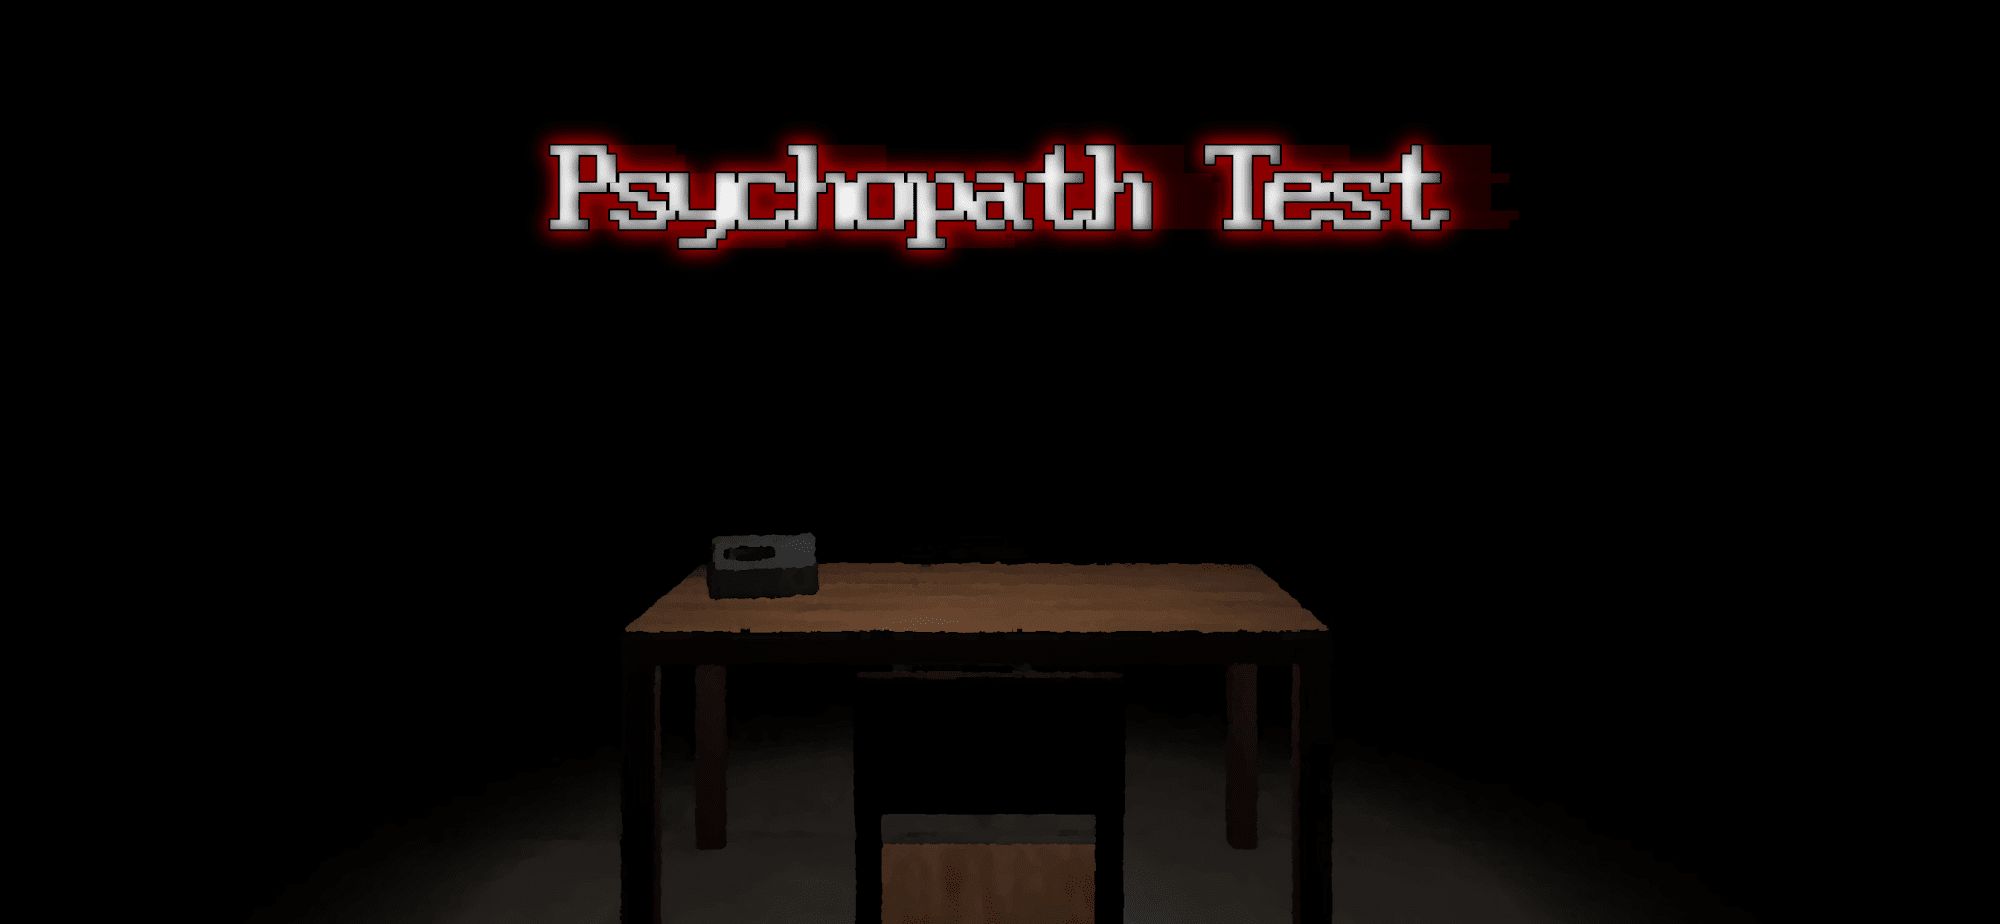 Descargar Psychopath Test gratis para Android.